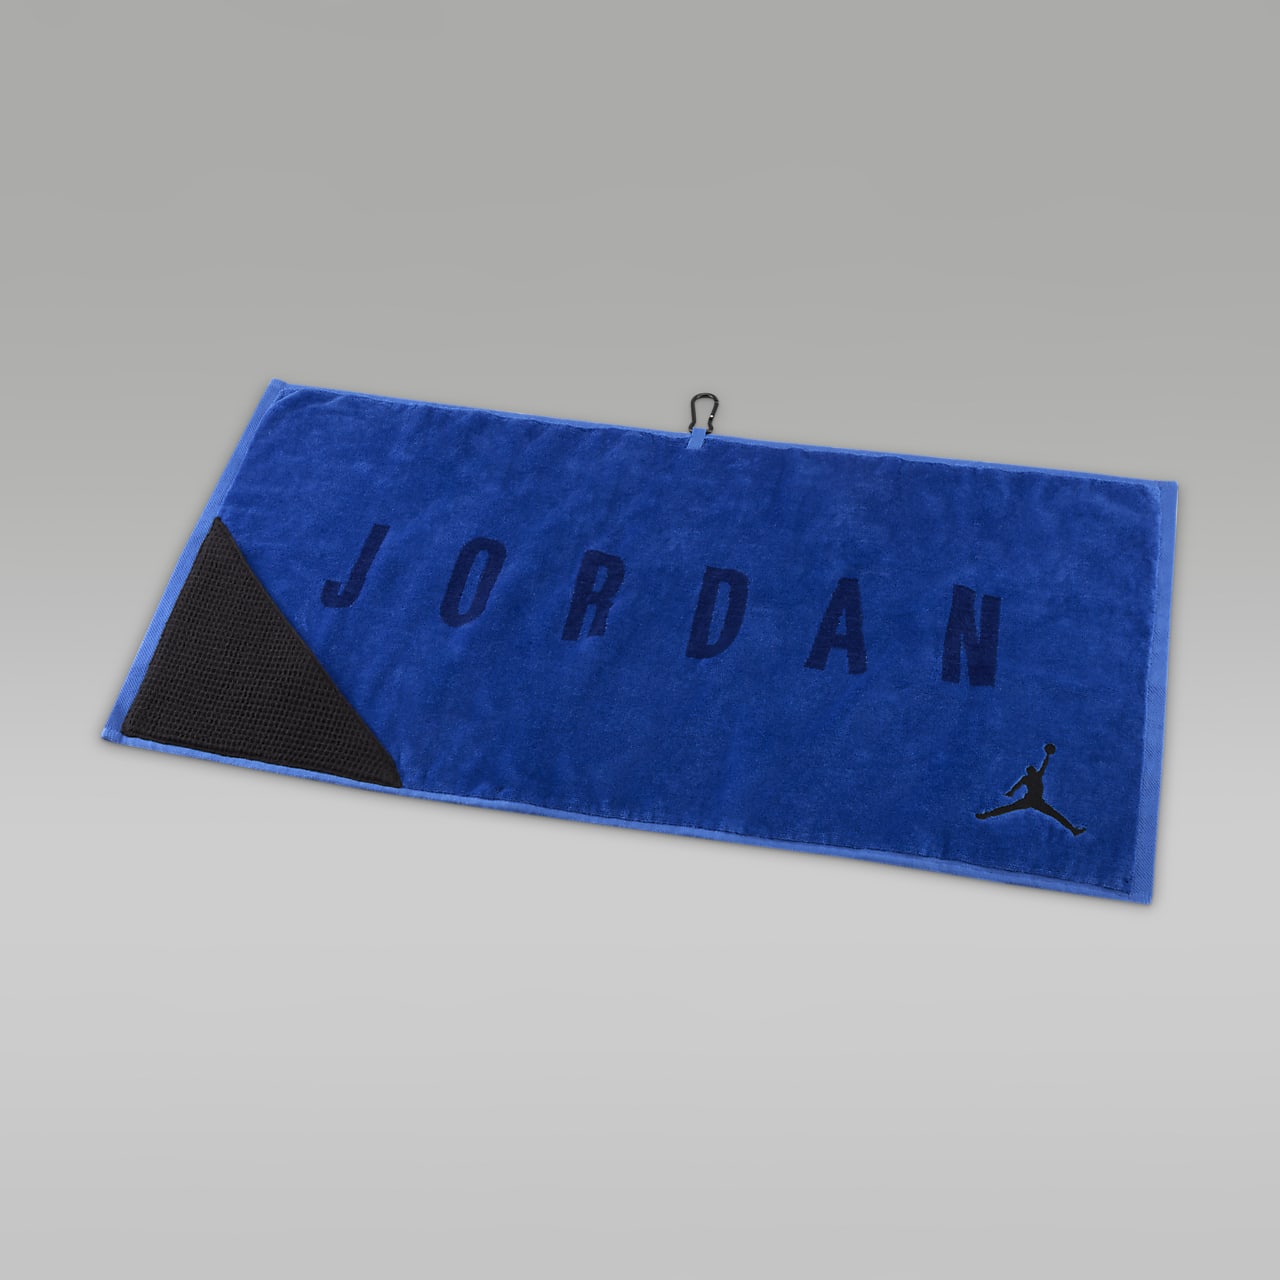 Jordan Utility Golf Towel. Nike.com